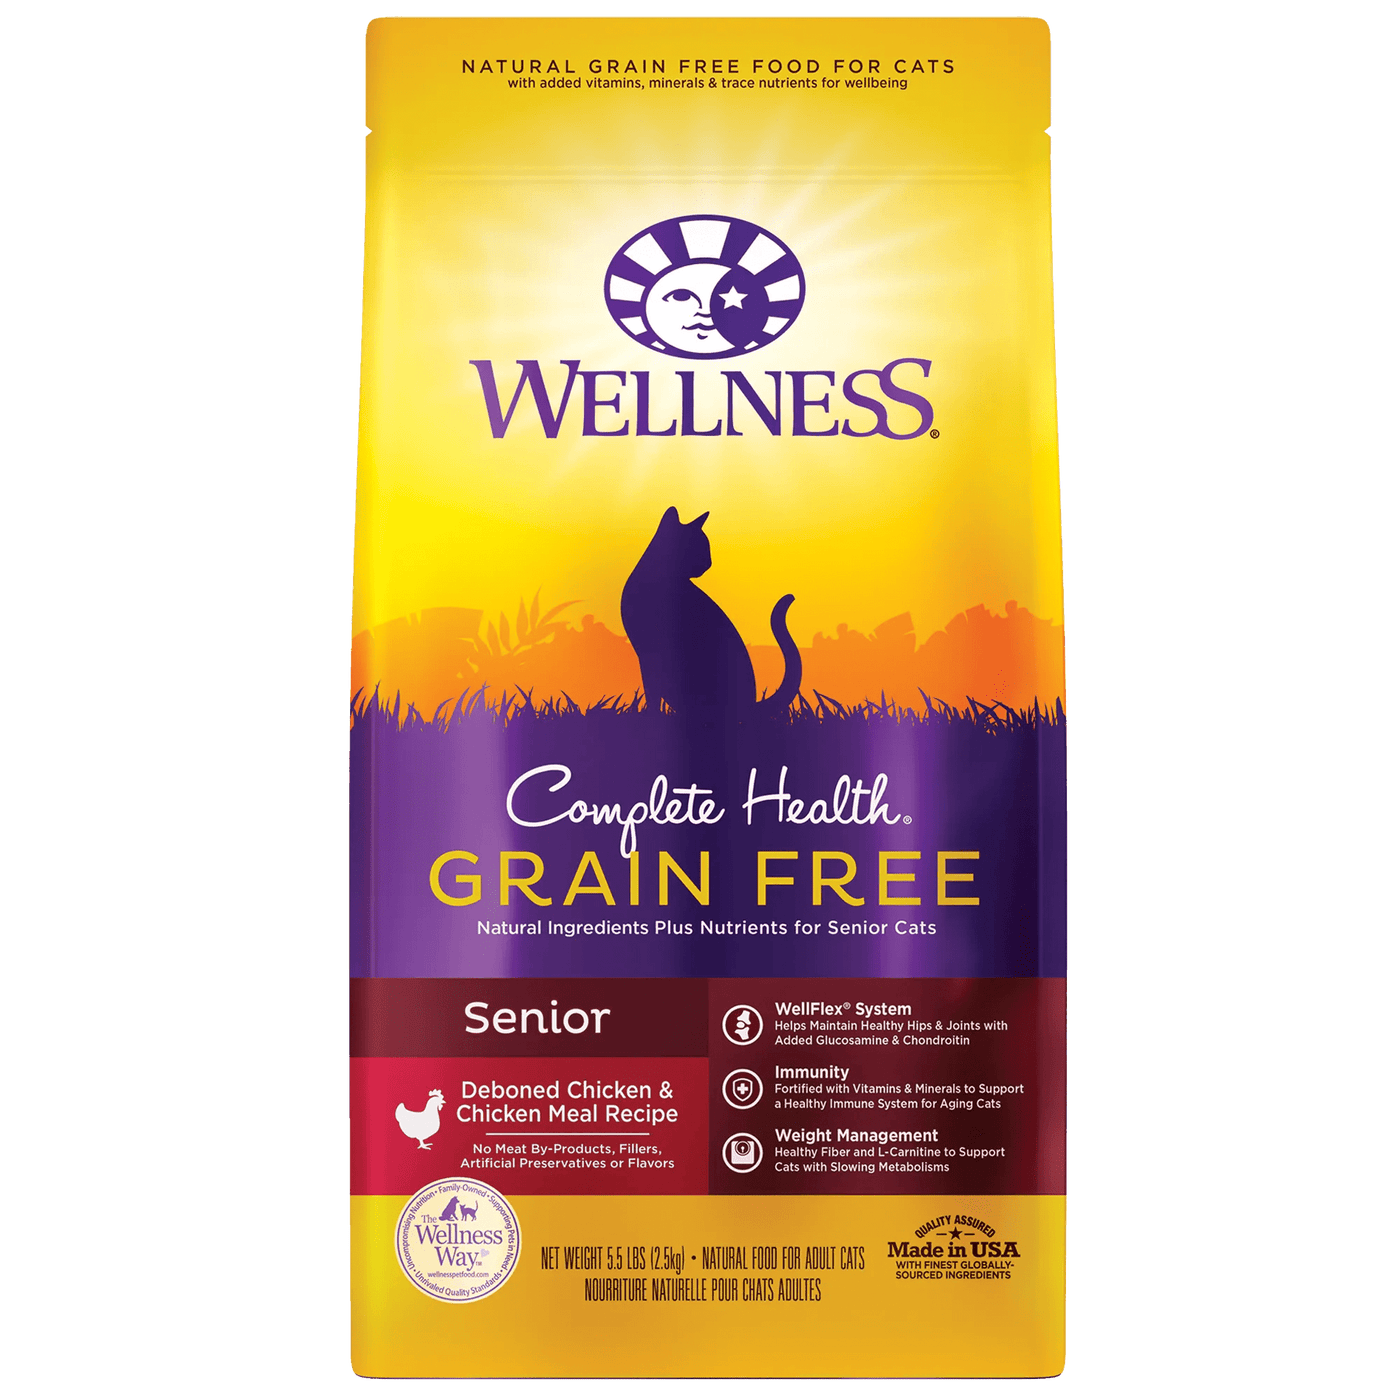 Complete Health™ Grain Free Senior Recipe Deboned Chicken & Chicken Meal - Dry Cat Food - Wellness